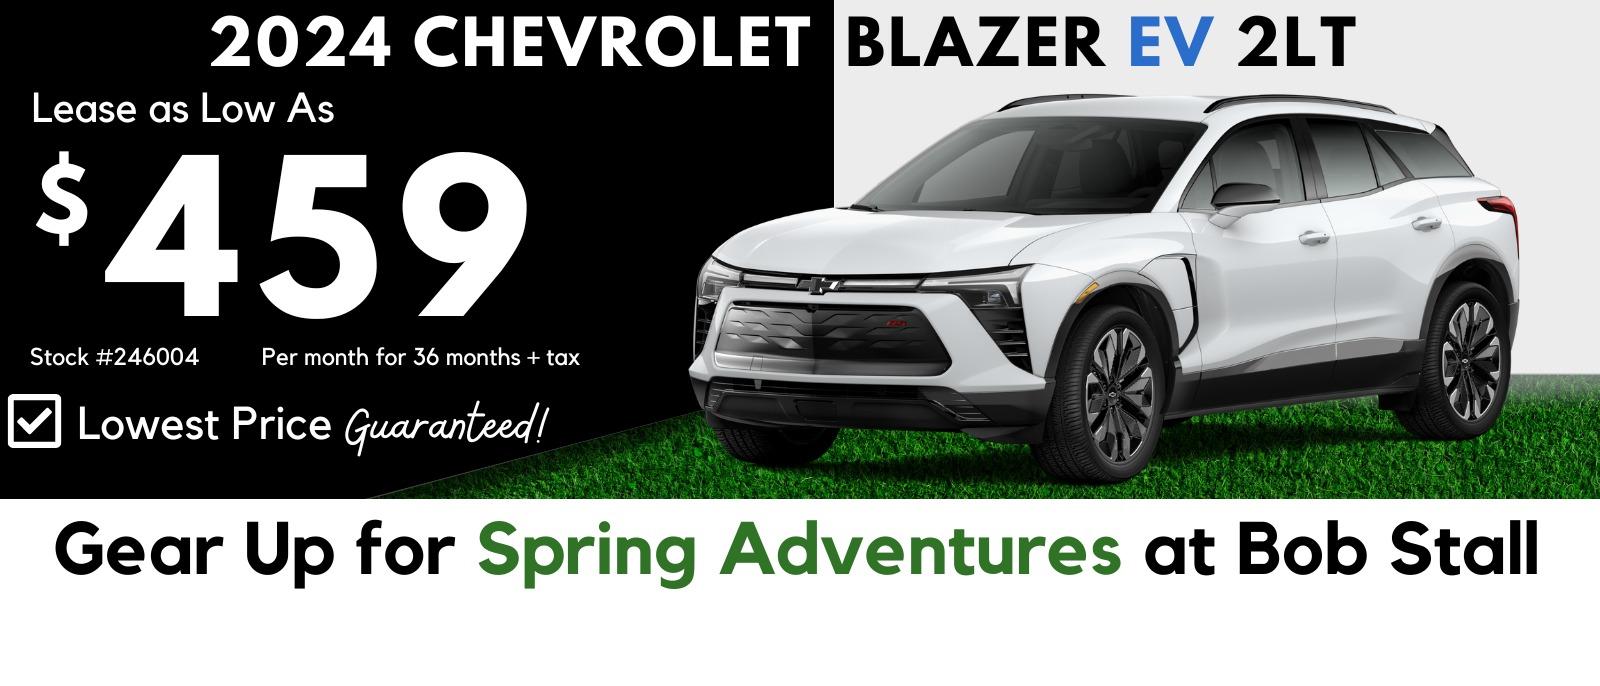 2024 Blazer EV Savings - Lease as low as $459 per month for 36 Months